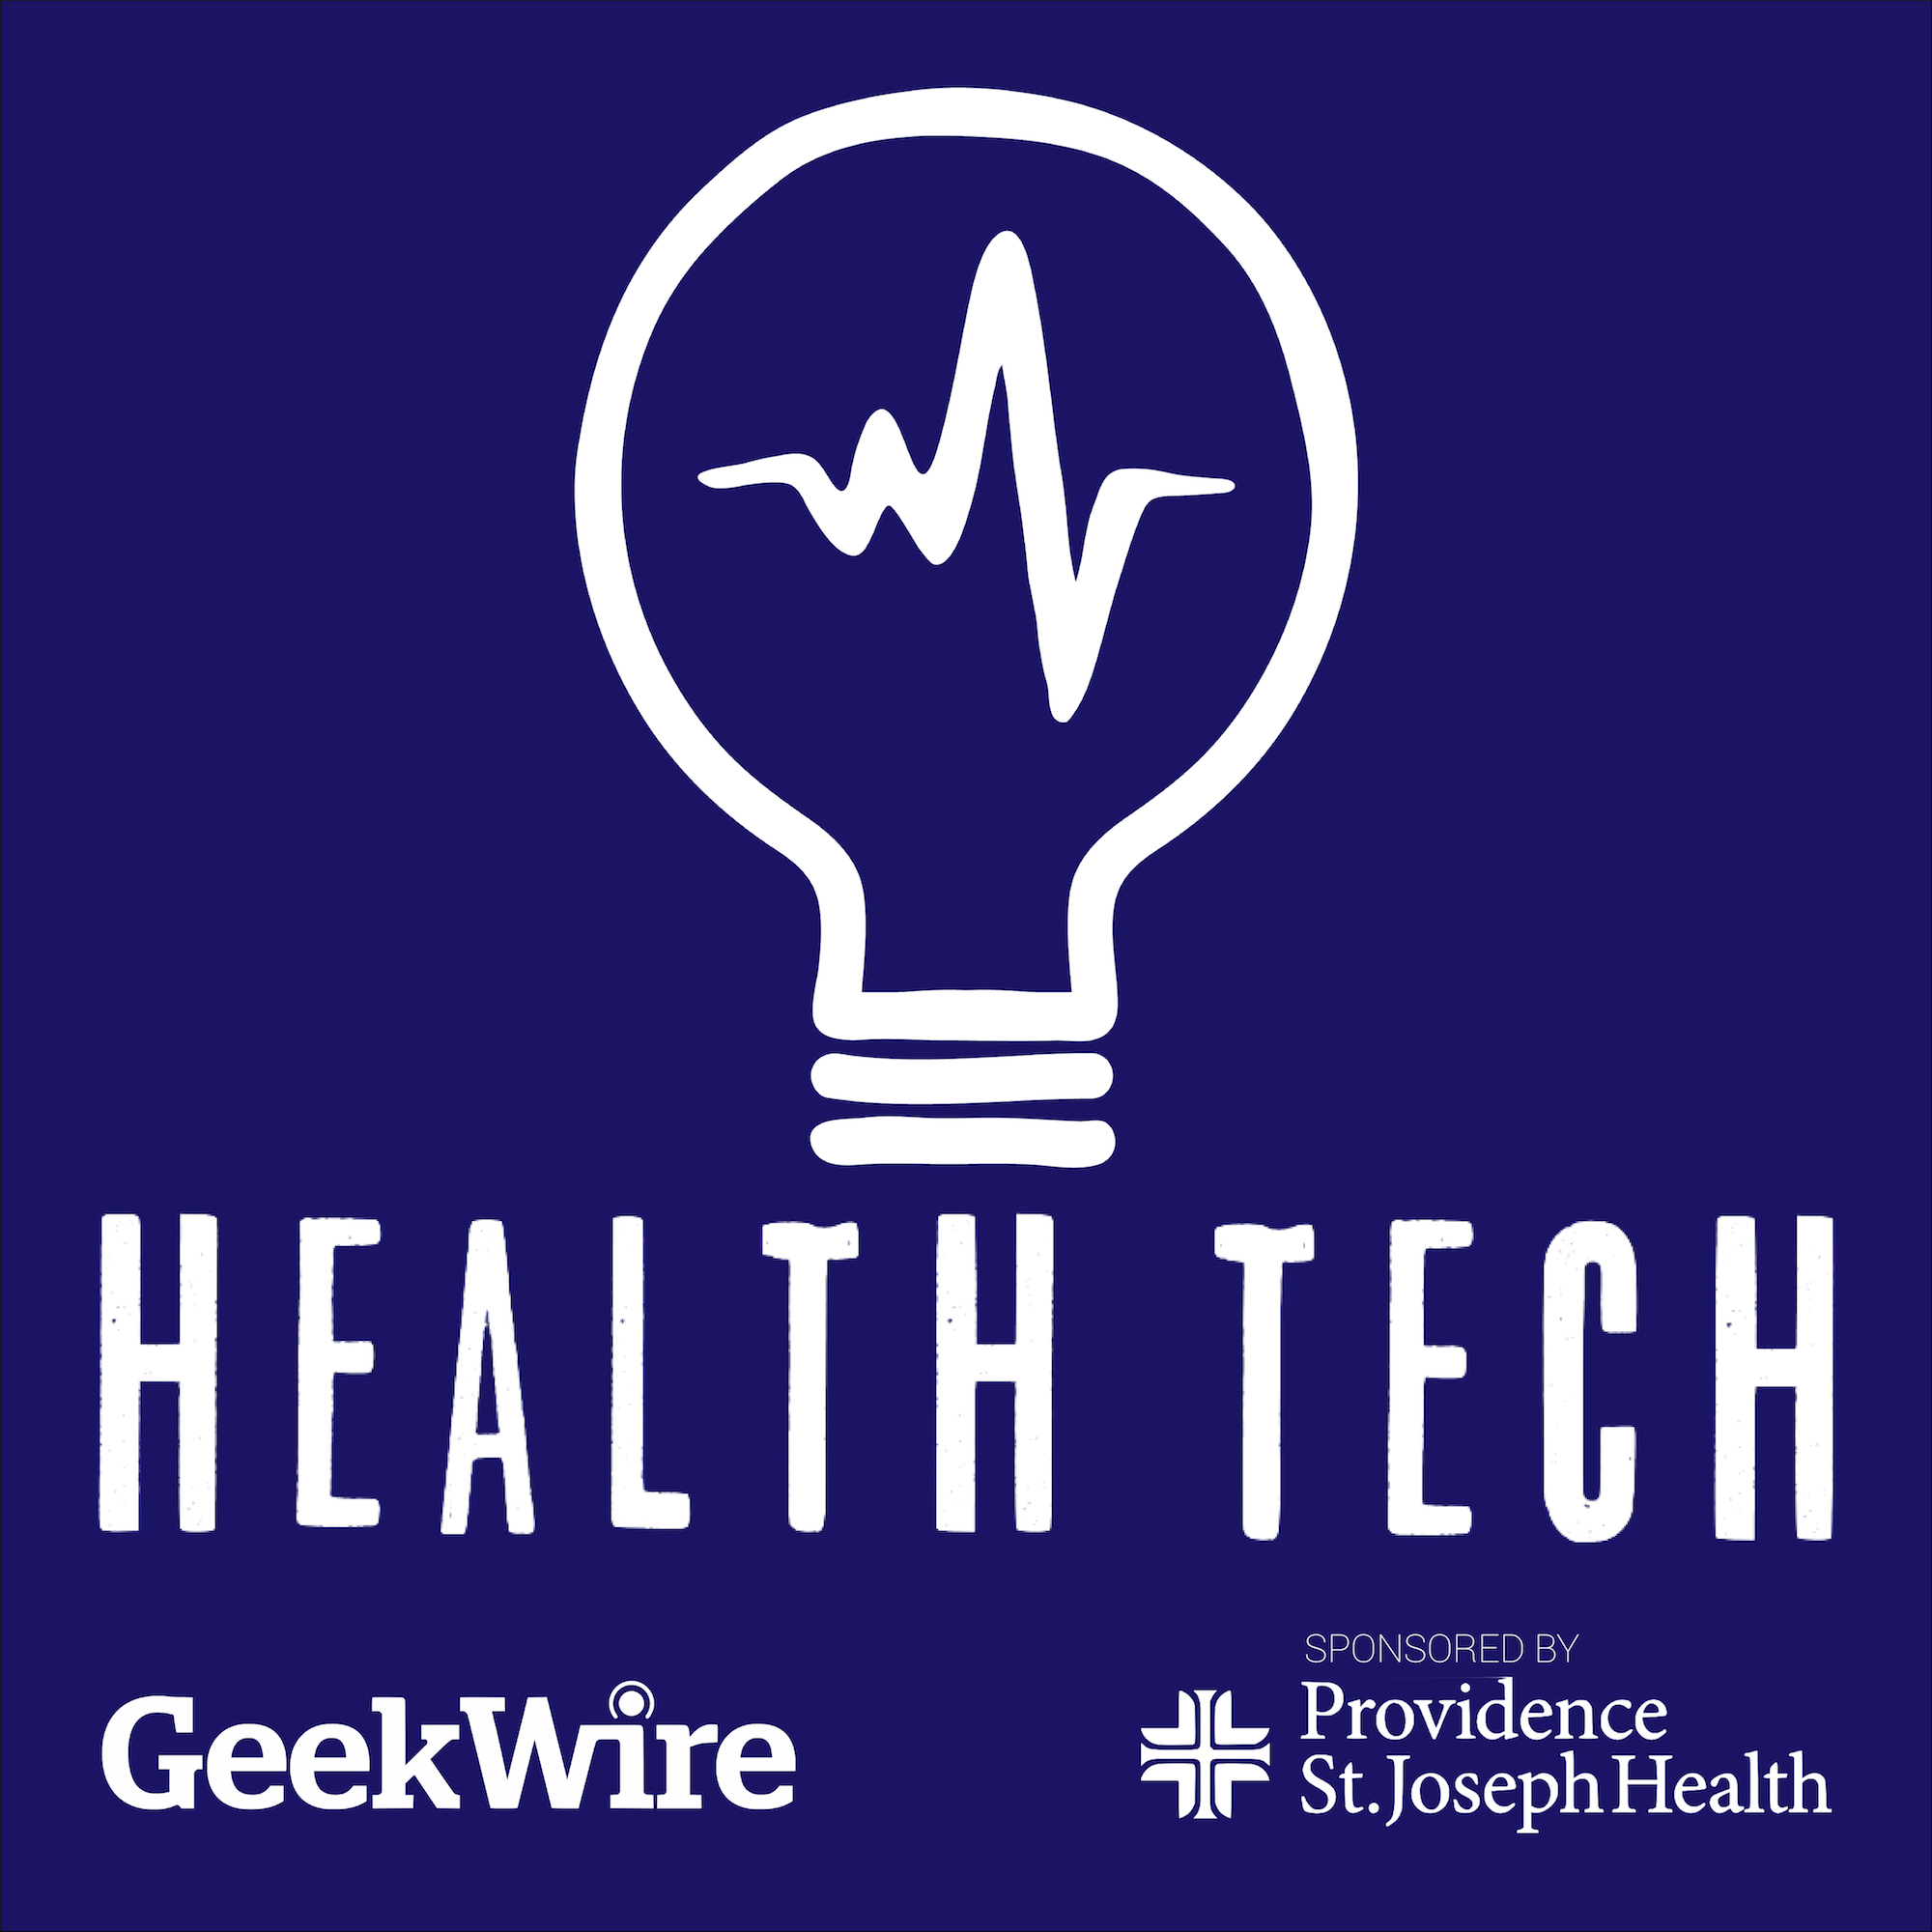 GeekWire Health Tech